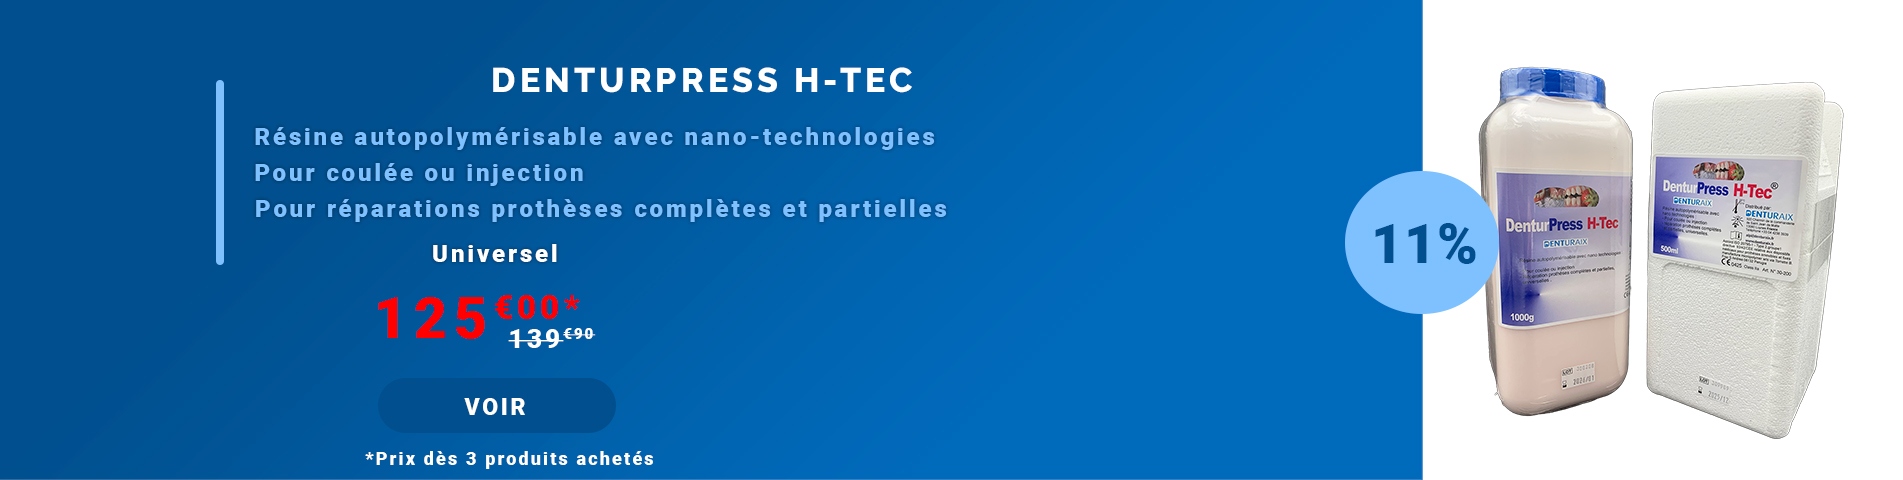 DenturPress H-TEC